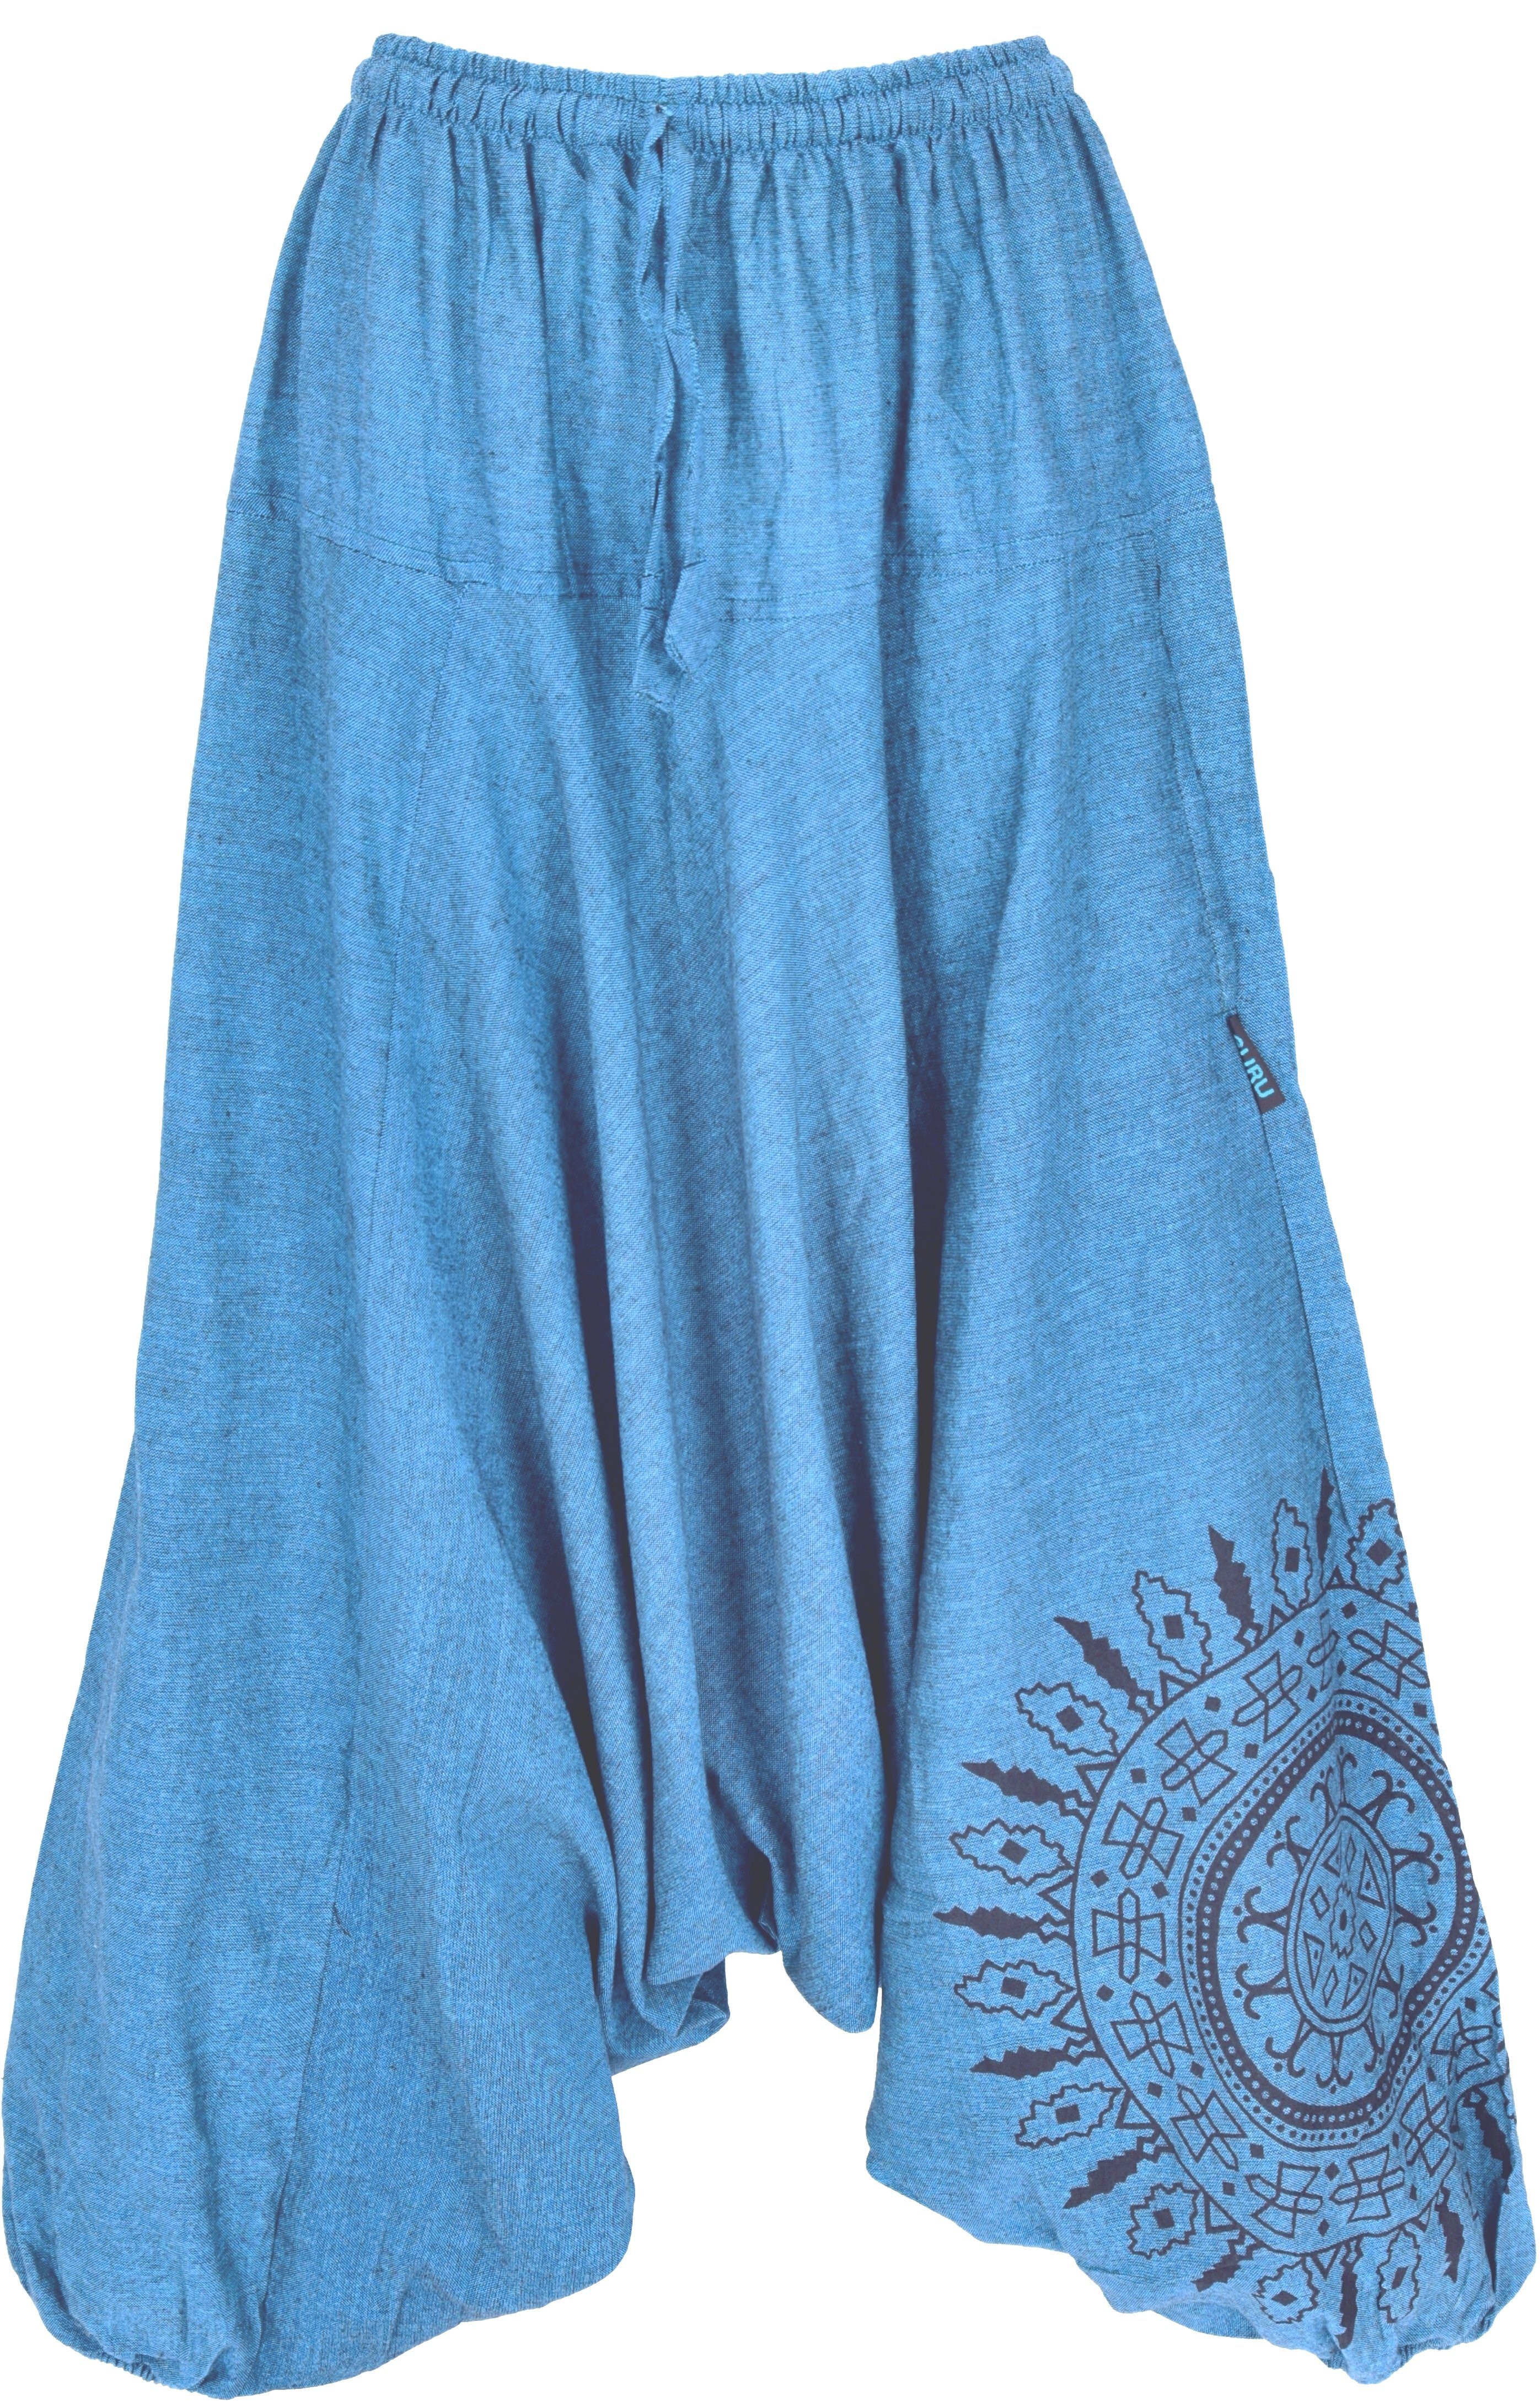 Guru-Shop Relaxhose Haremshose Pluderhose, Pumphose mit Mandala,.. Ethno Style, alternative Bekleidung blau